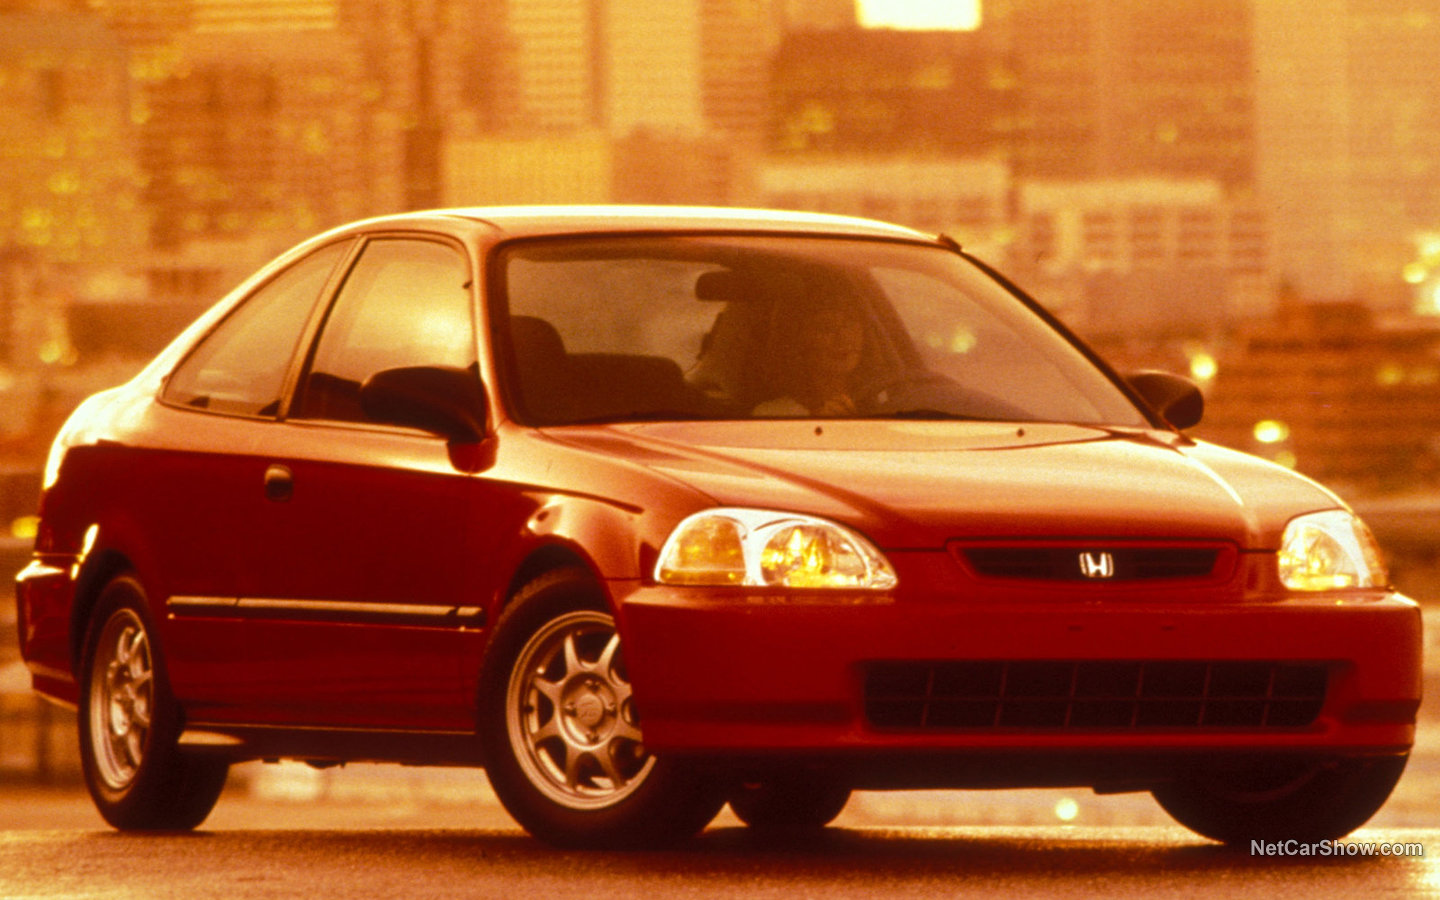 Honda Civic Coupe 1995 66530b7b